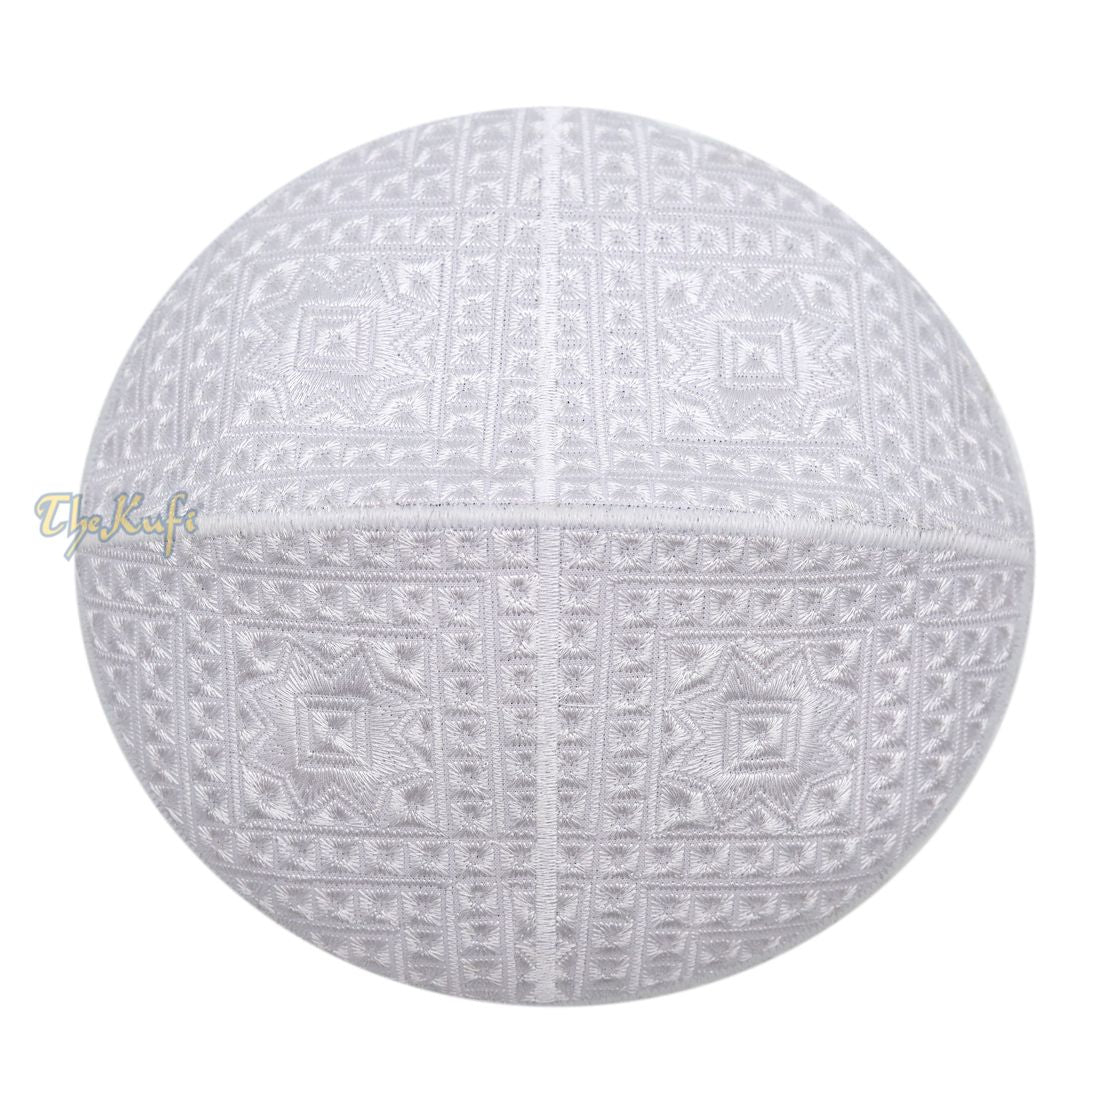 Pakistani Muslim Kufi Hats White Intricate Embroidery Diamond Motif Rigid Round Islamic Prayer Cap Topi Tupi Head Cover